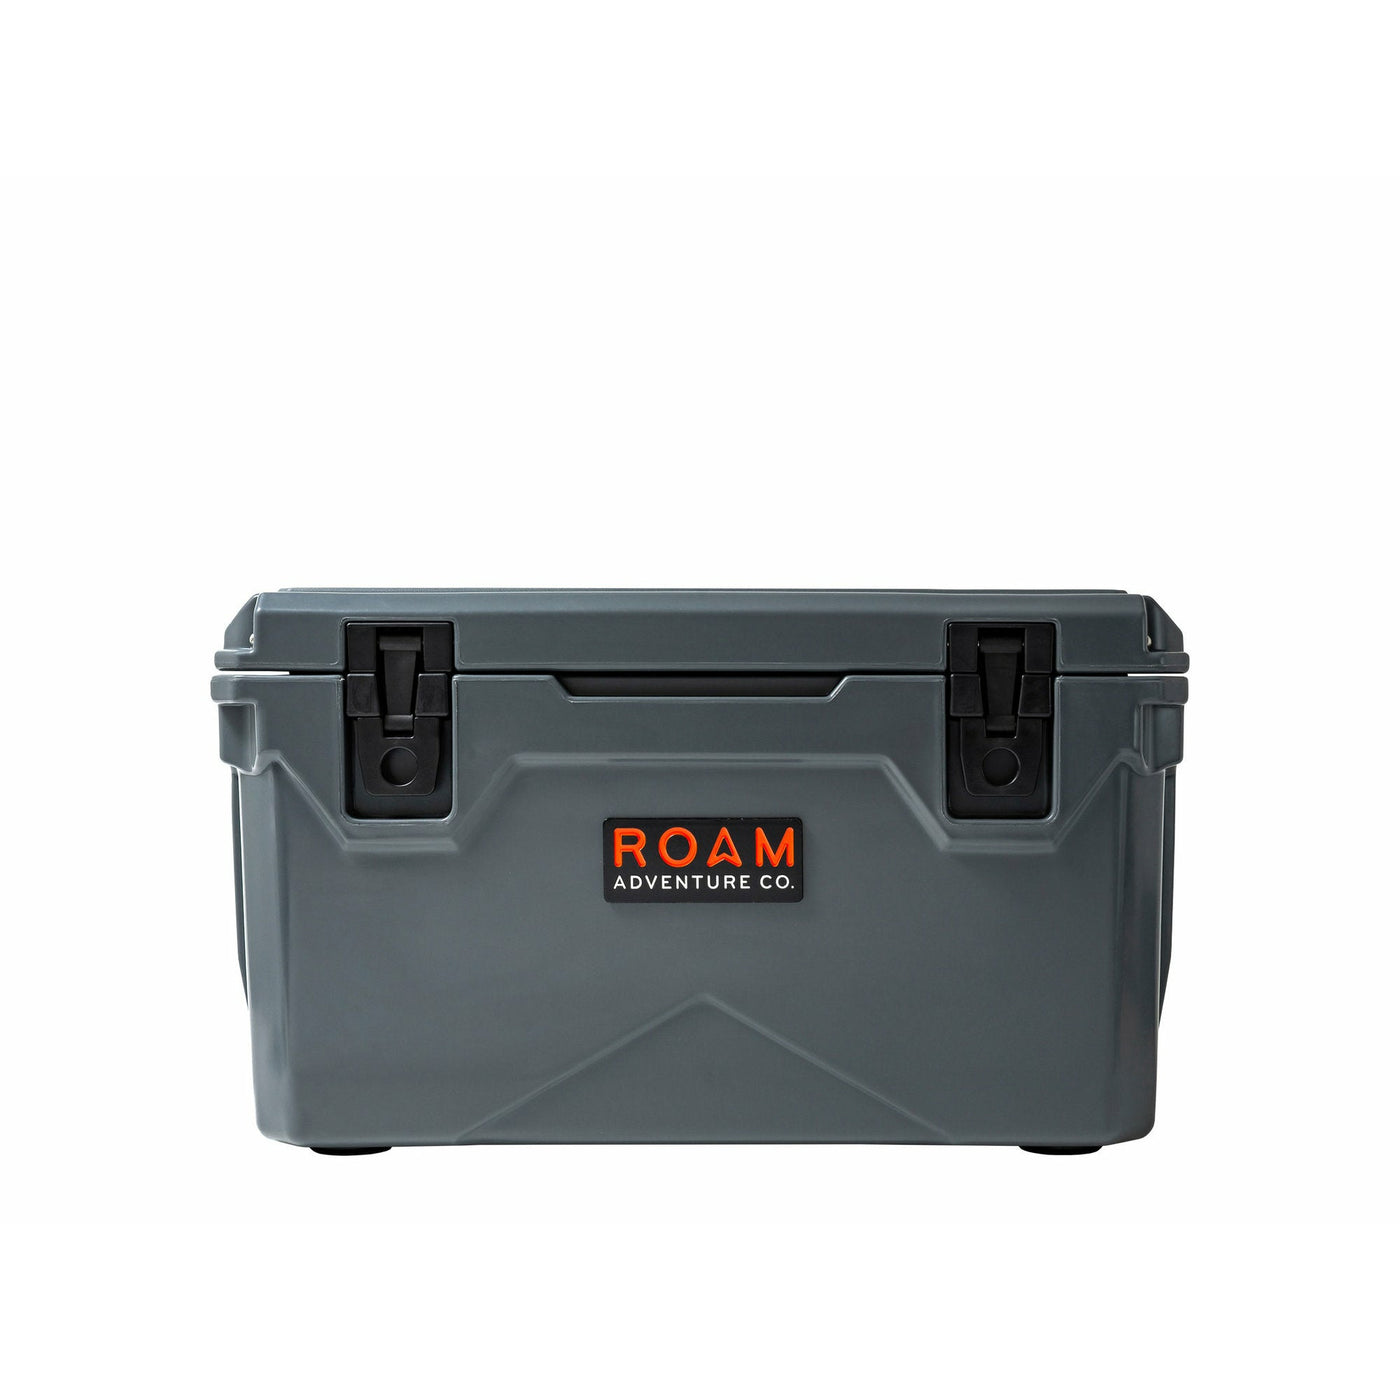 Roam Adventure Co. 45 QT Rugged Cooler